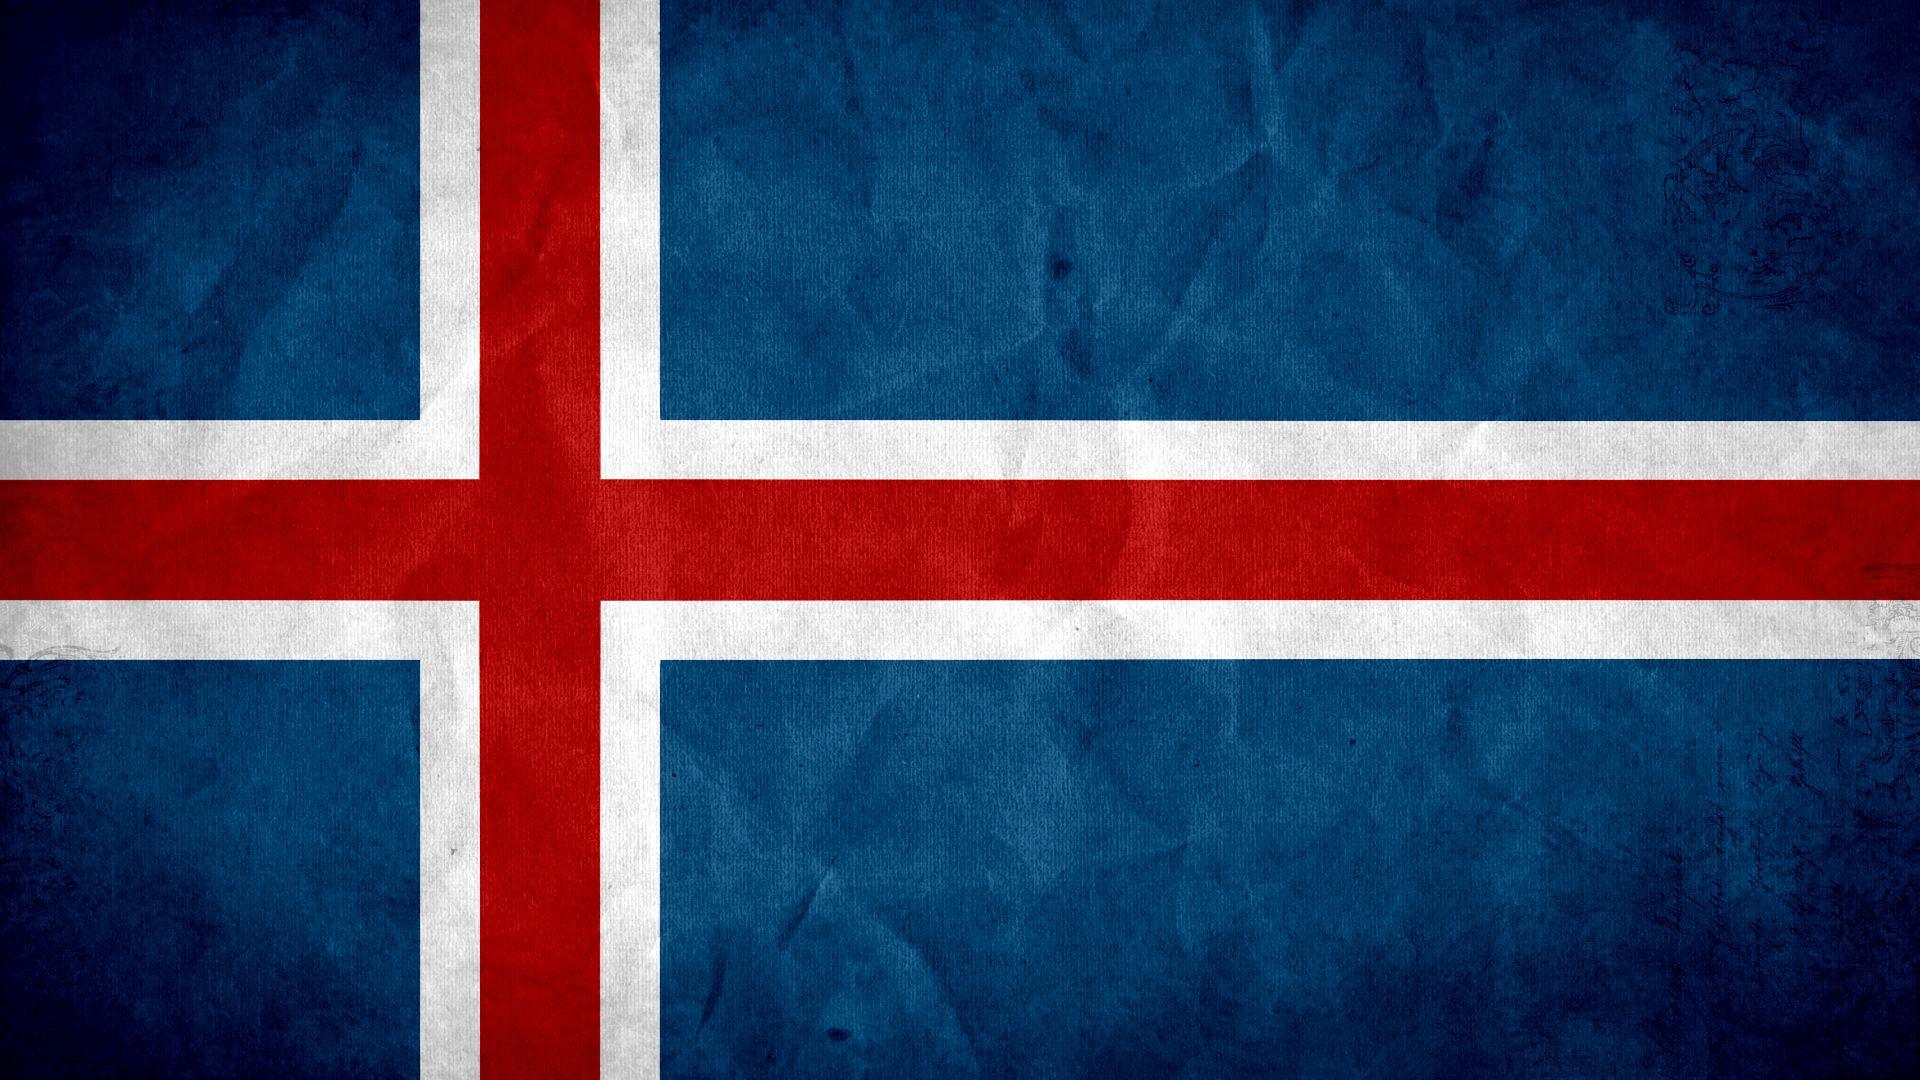 Iceland Flag Desktop Wallpaper 50530 1920x1080 px